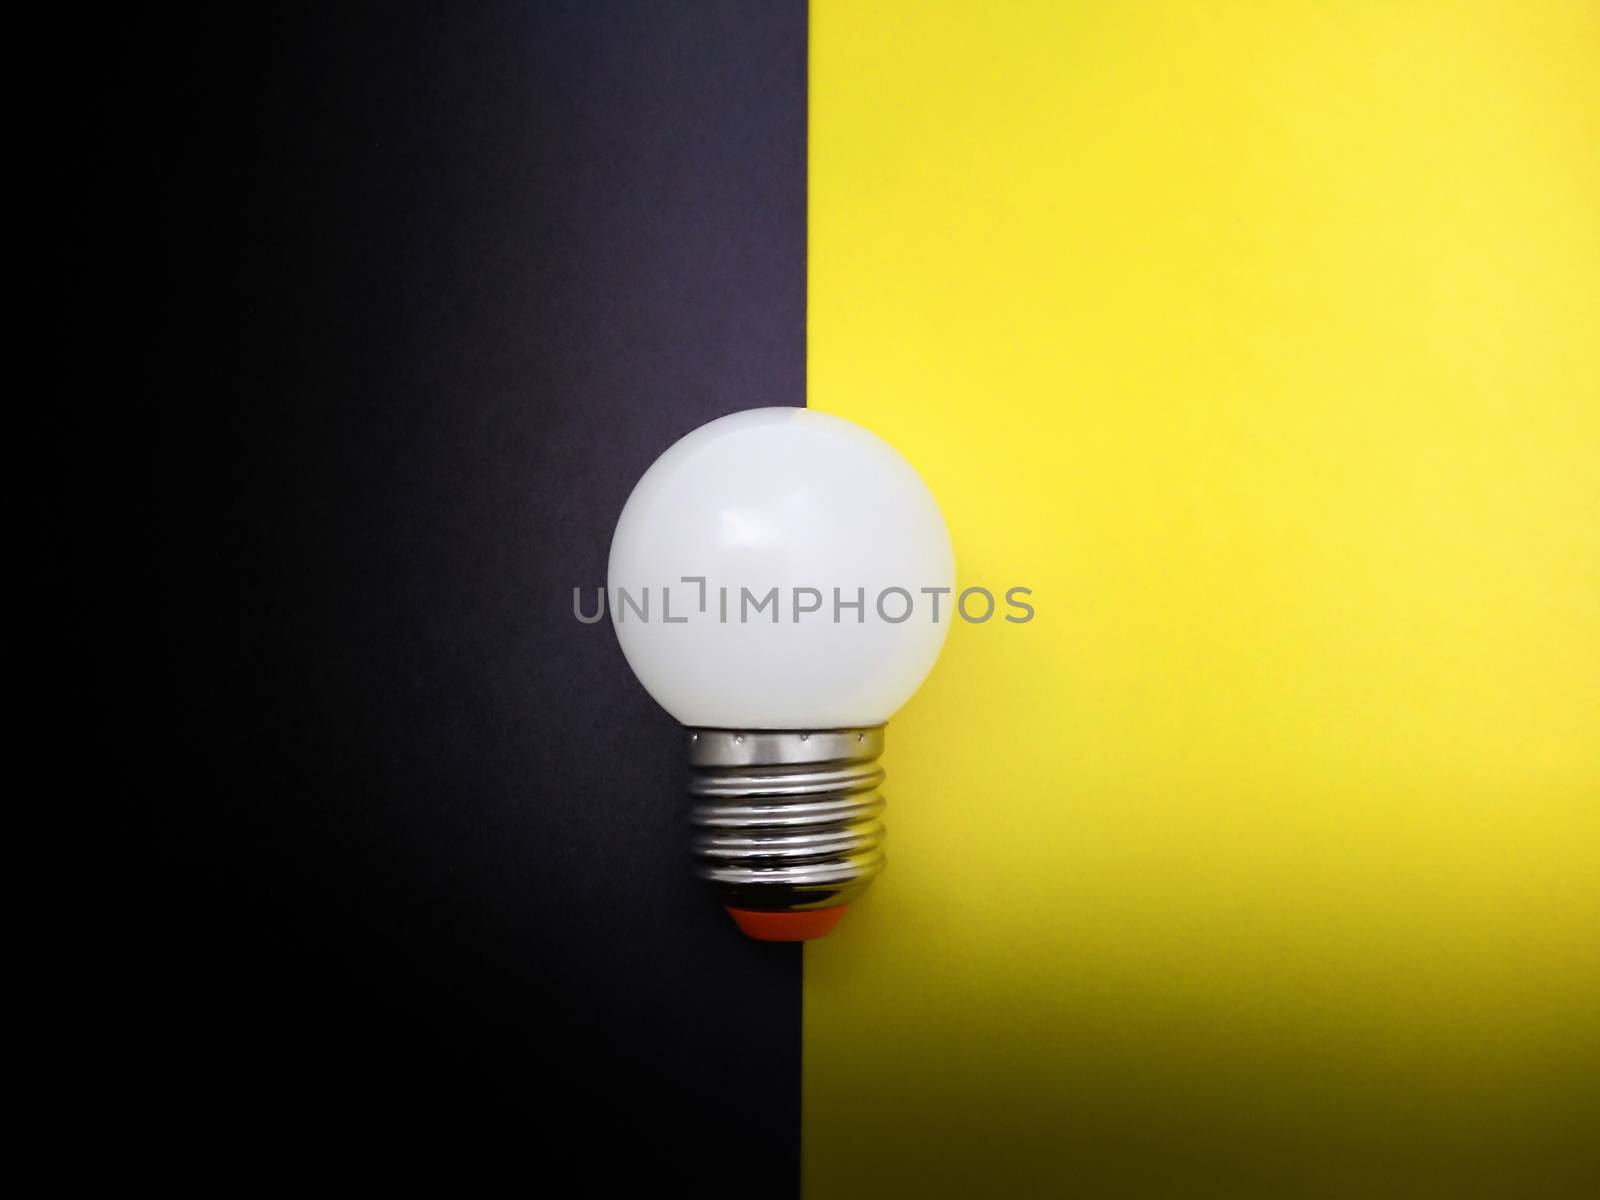 Light Bulb on Black and Yellow Paper by seika_chujo